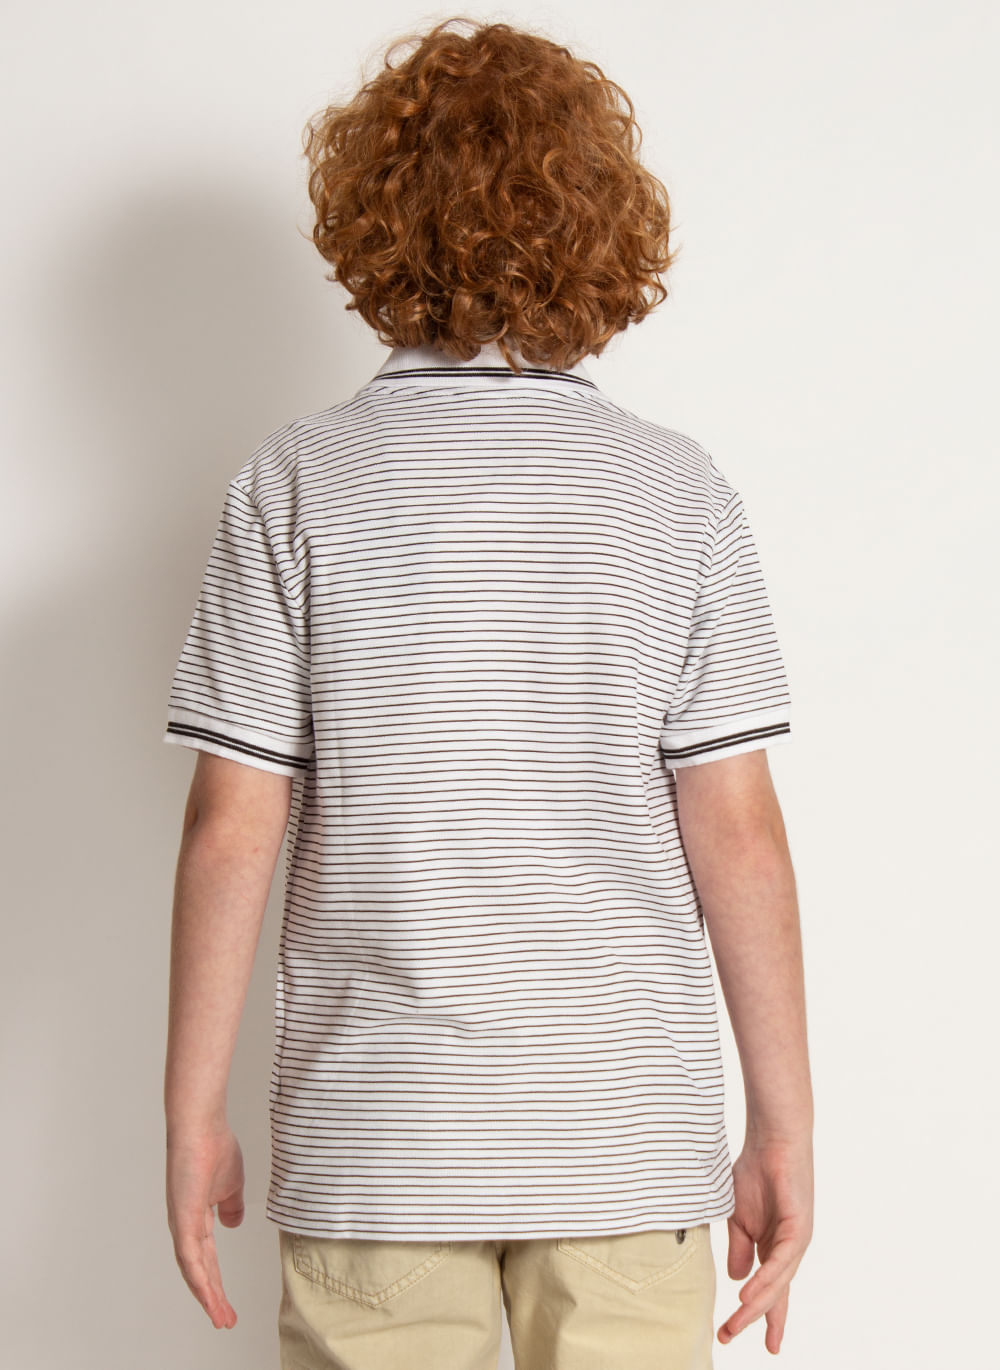 camisa-polo-aleatory-infantil-patch-piquet-com-ziper-modelo-2020-2-